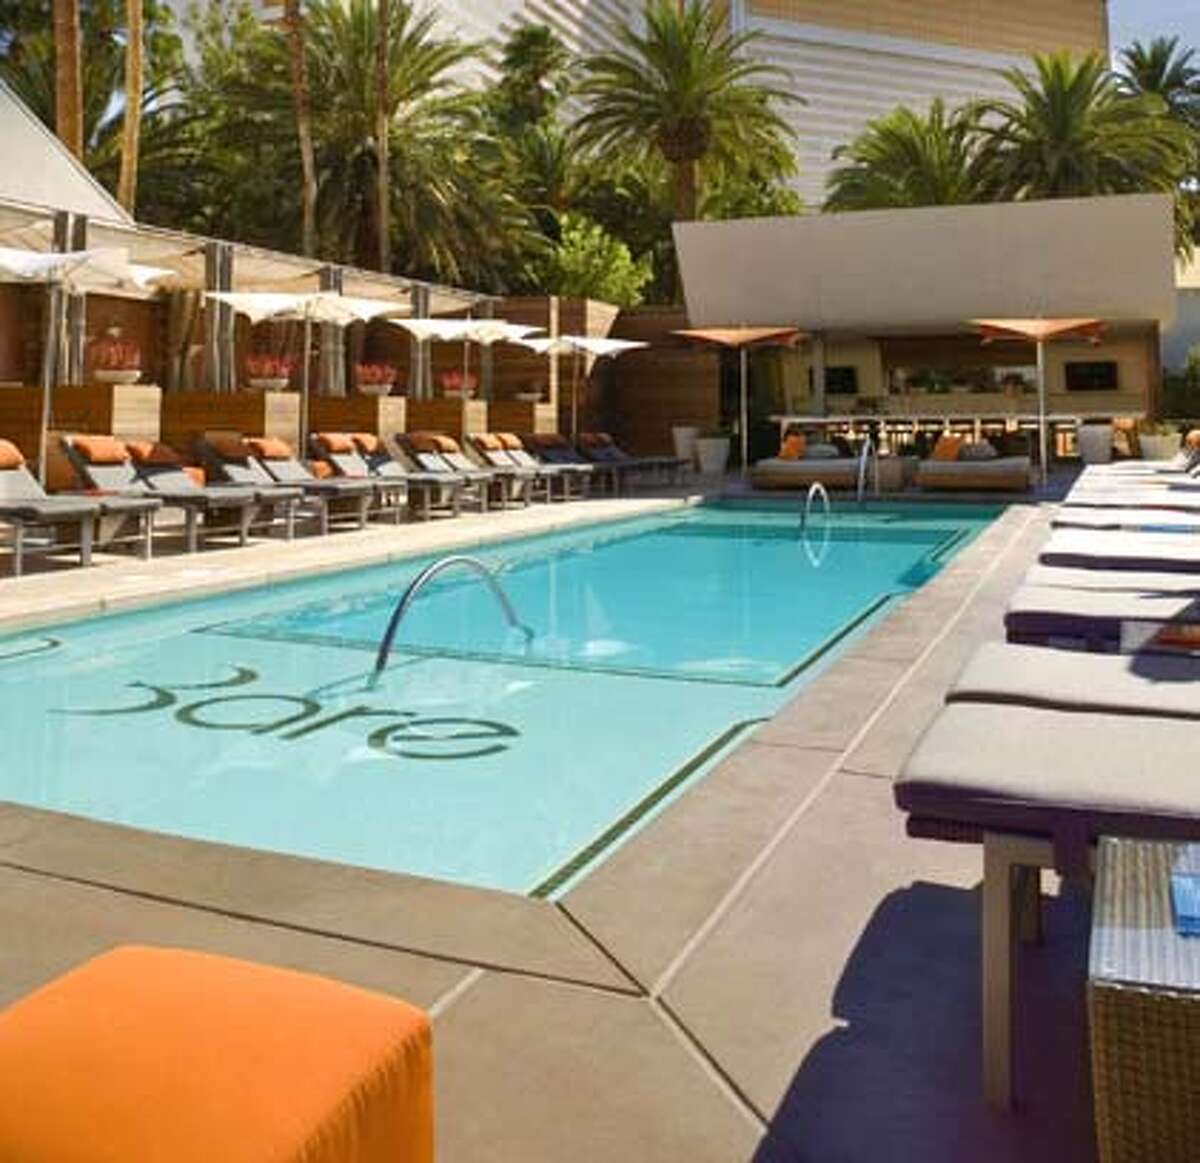 Las Vegas Adult Pools Encourage Topless Sunbathing